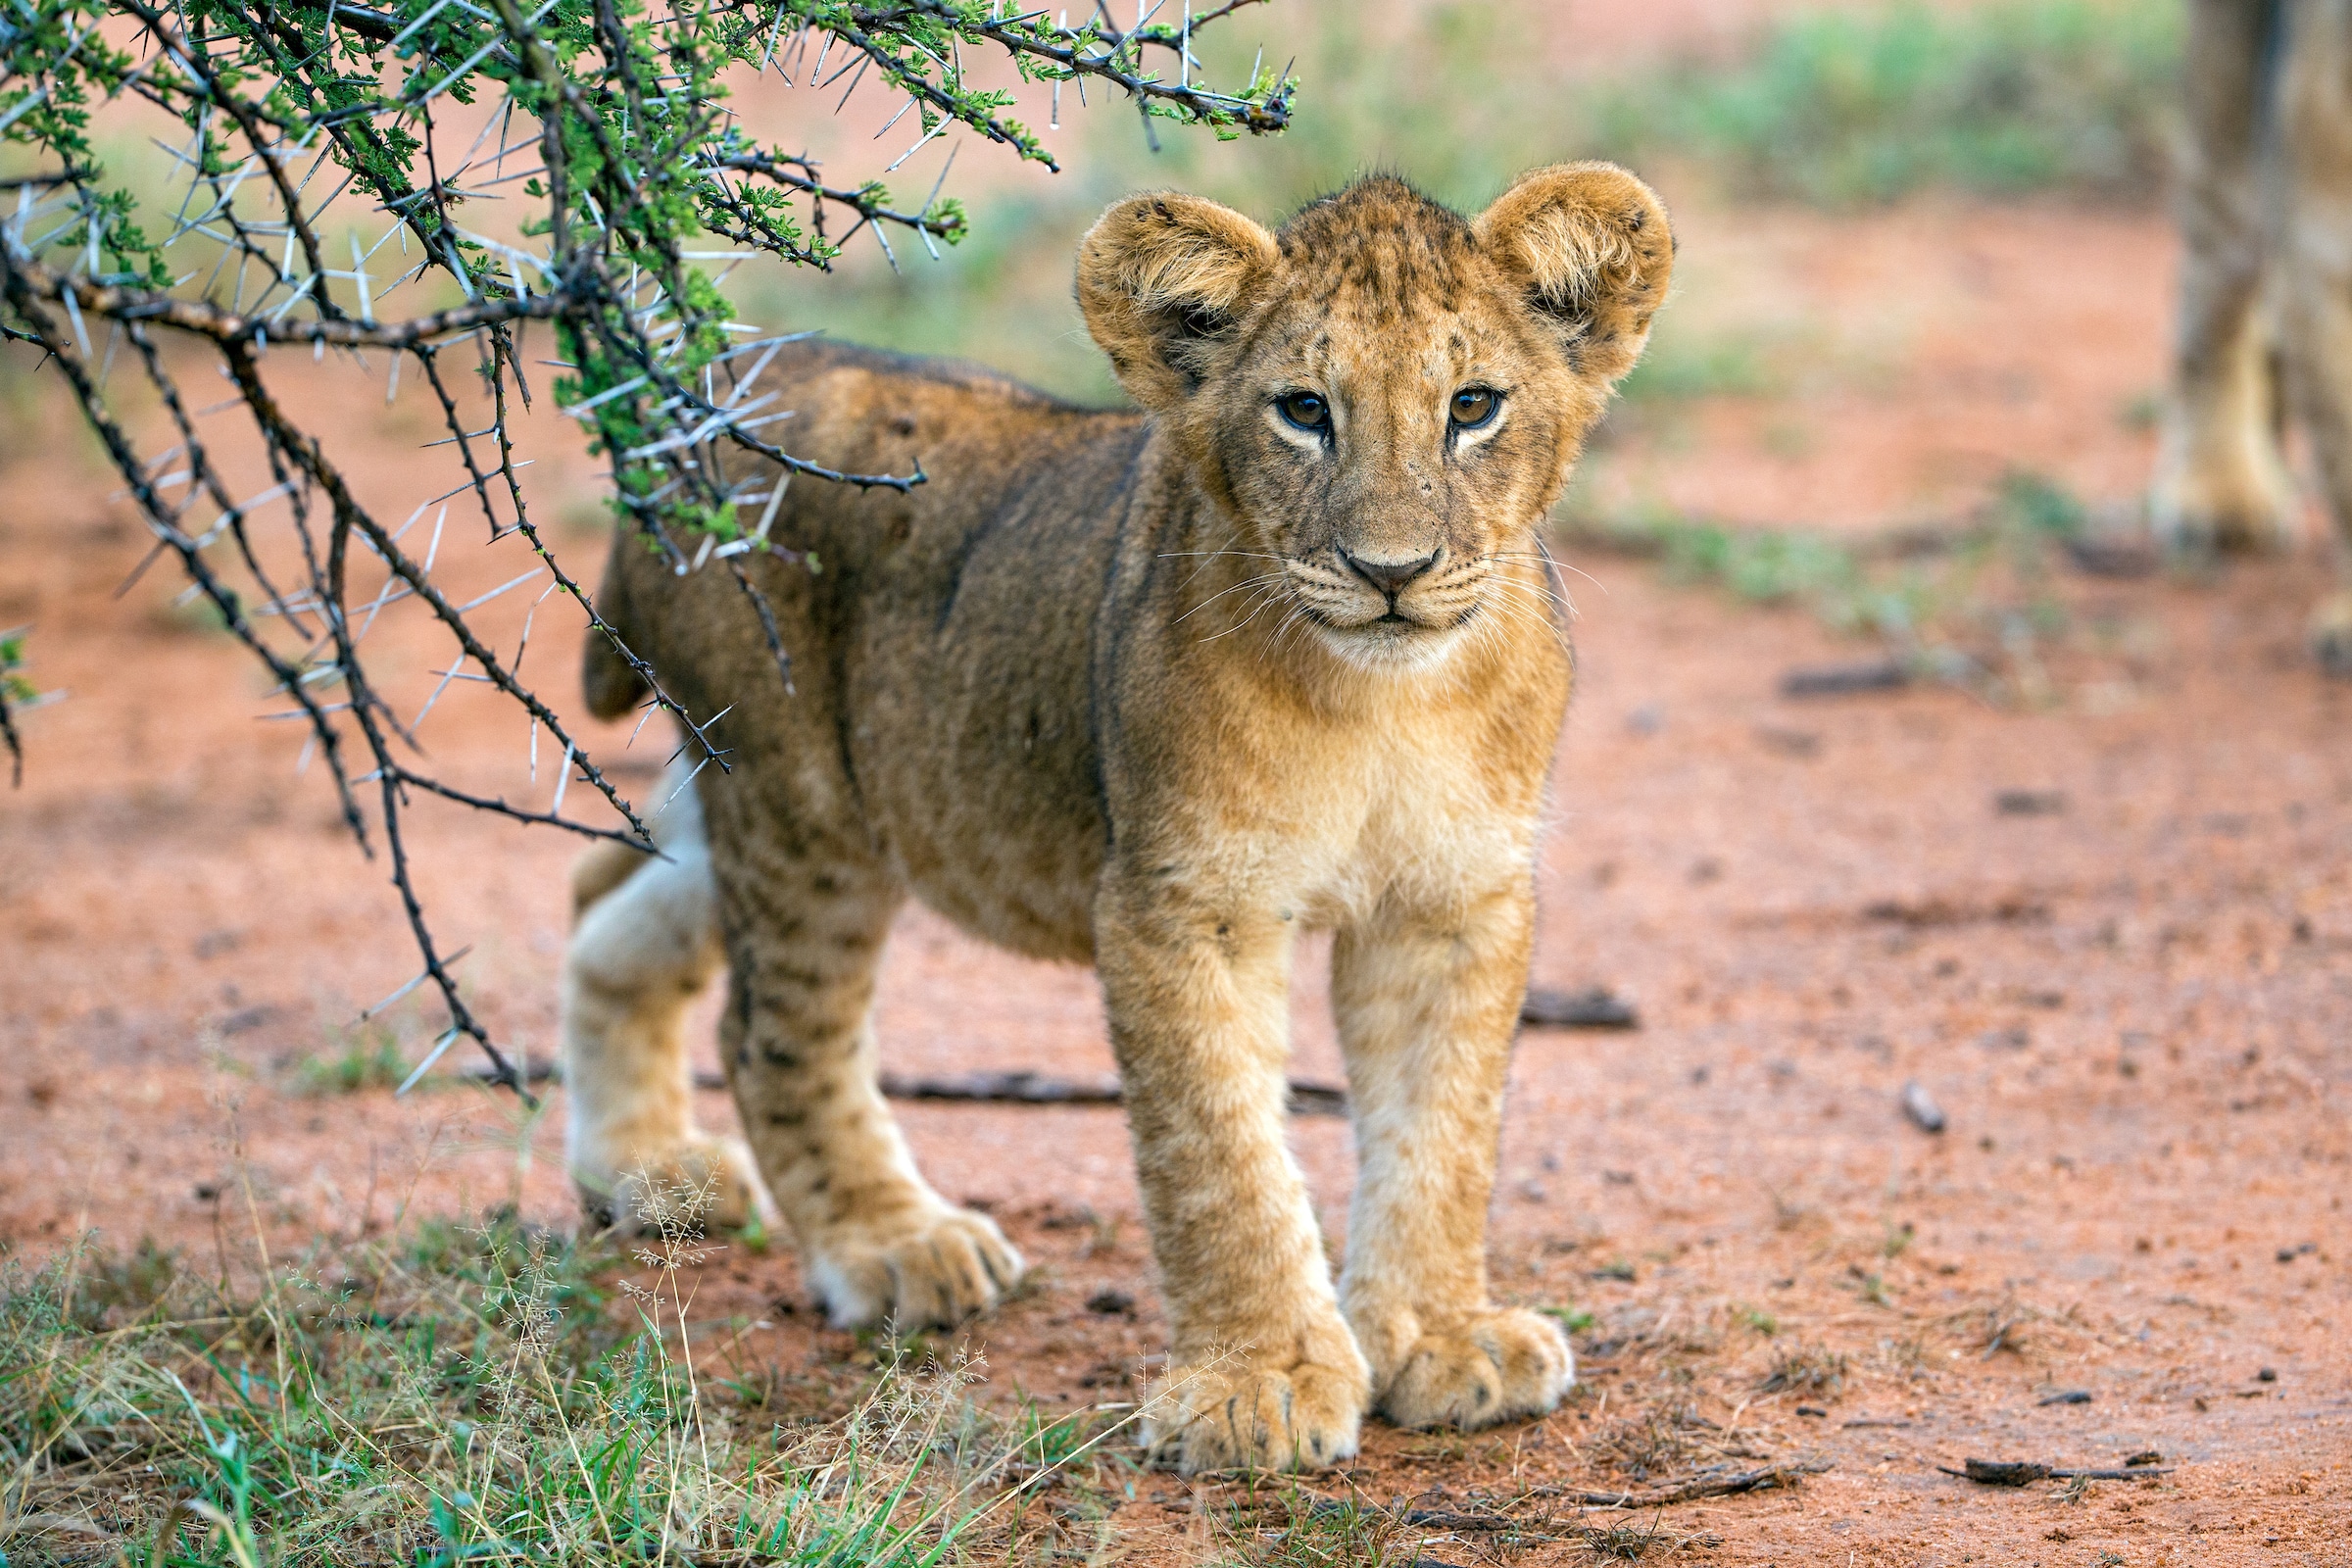 young lion cub